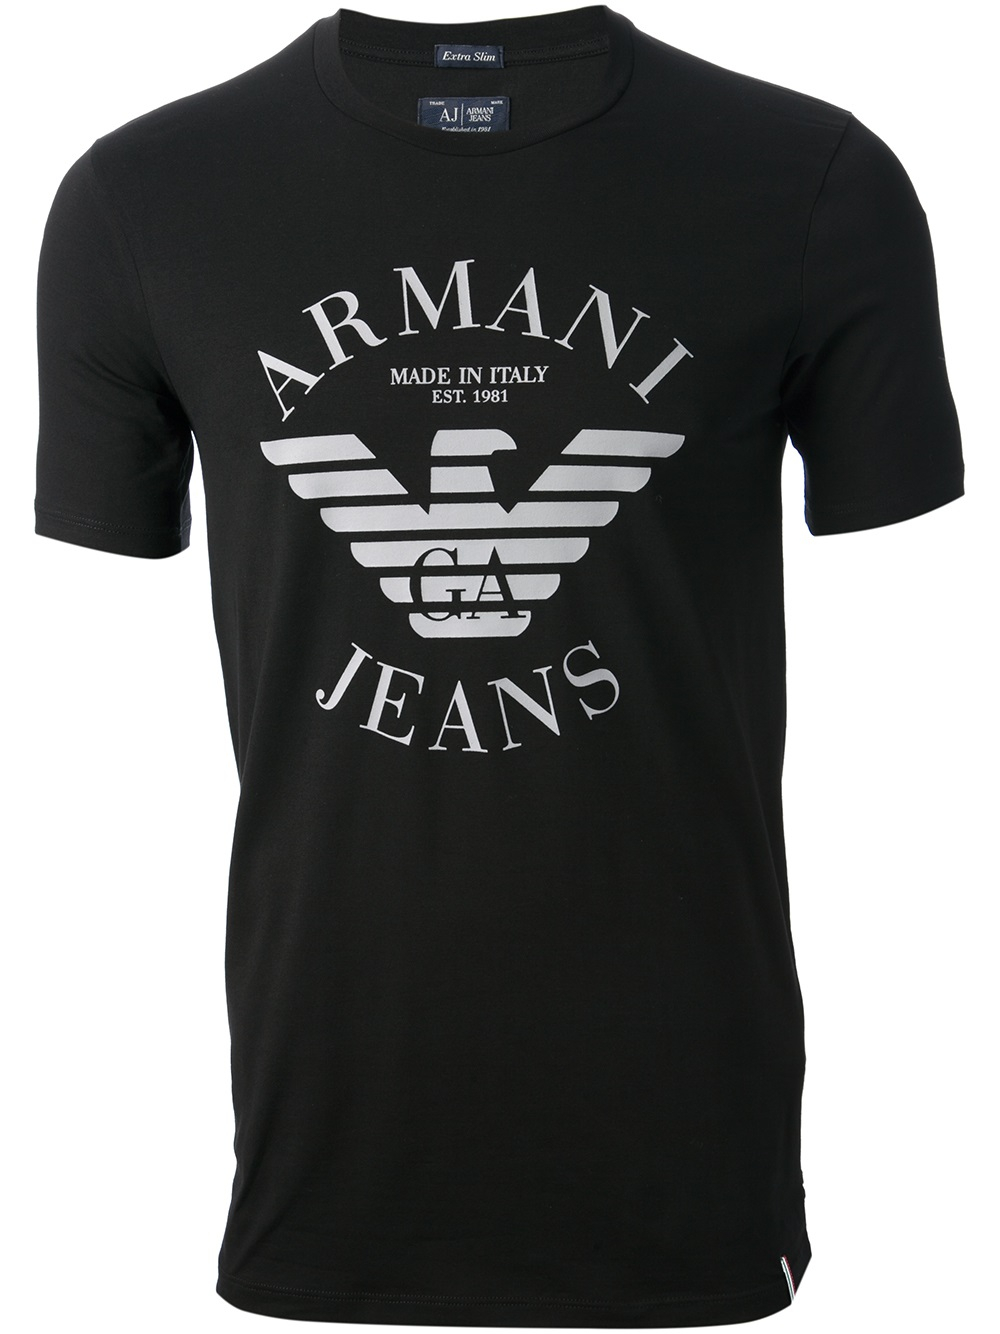 Armani Jeans Logo Tshirt in Black for Men - Lyst